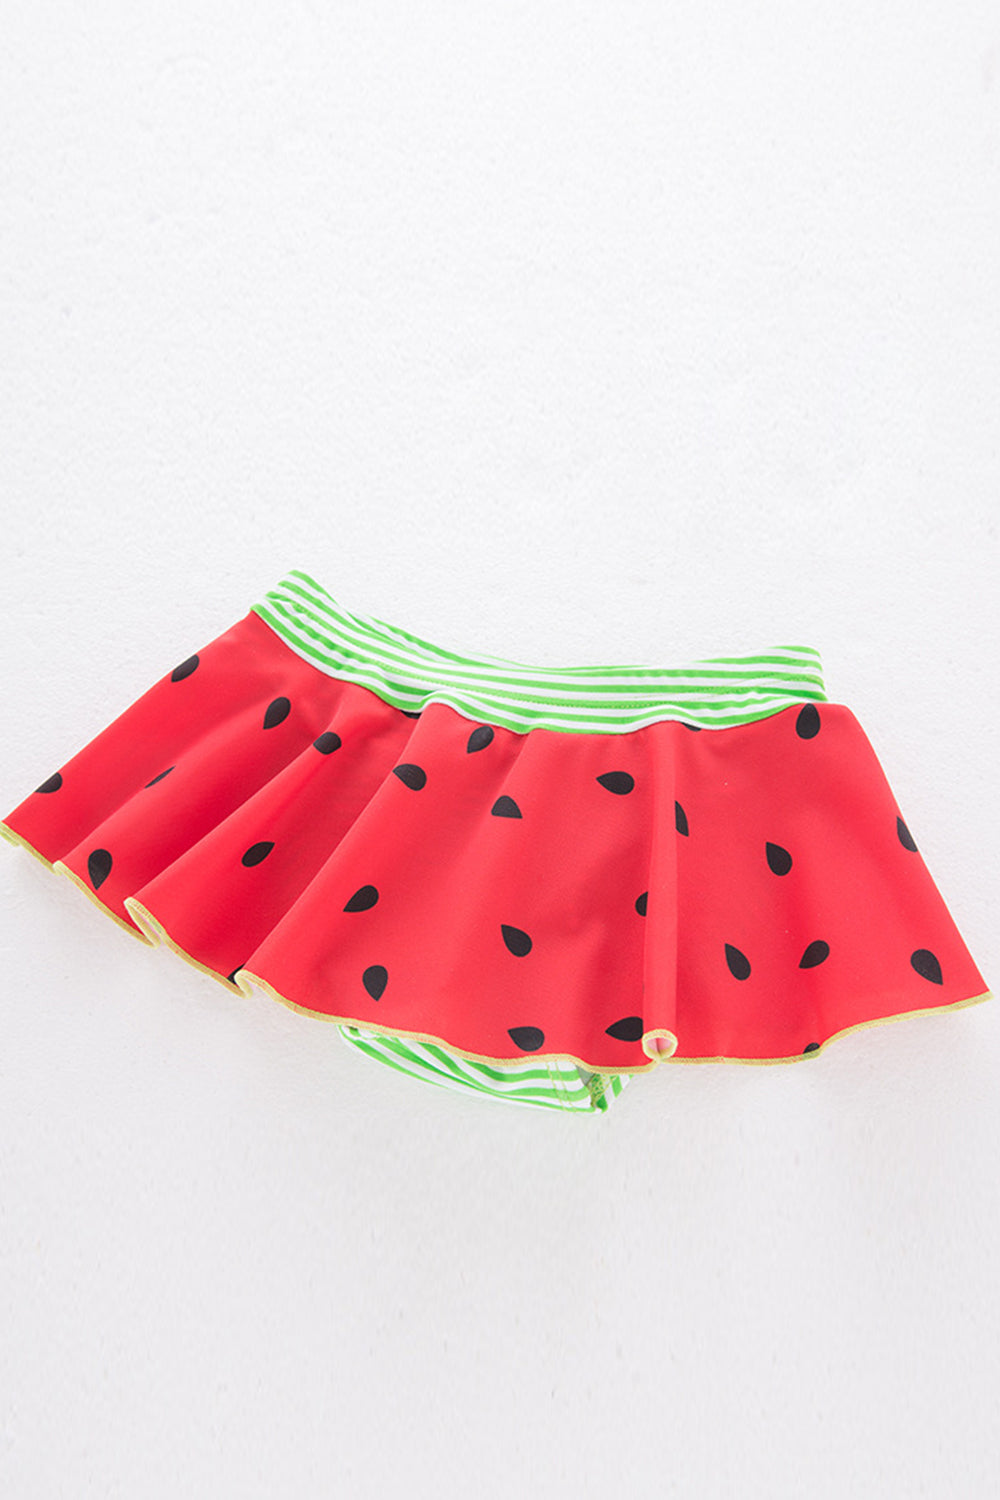 Iyasson Watermelon Printing Baby Girl Bikini Sets